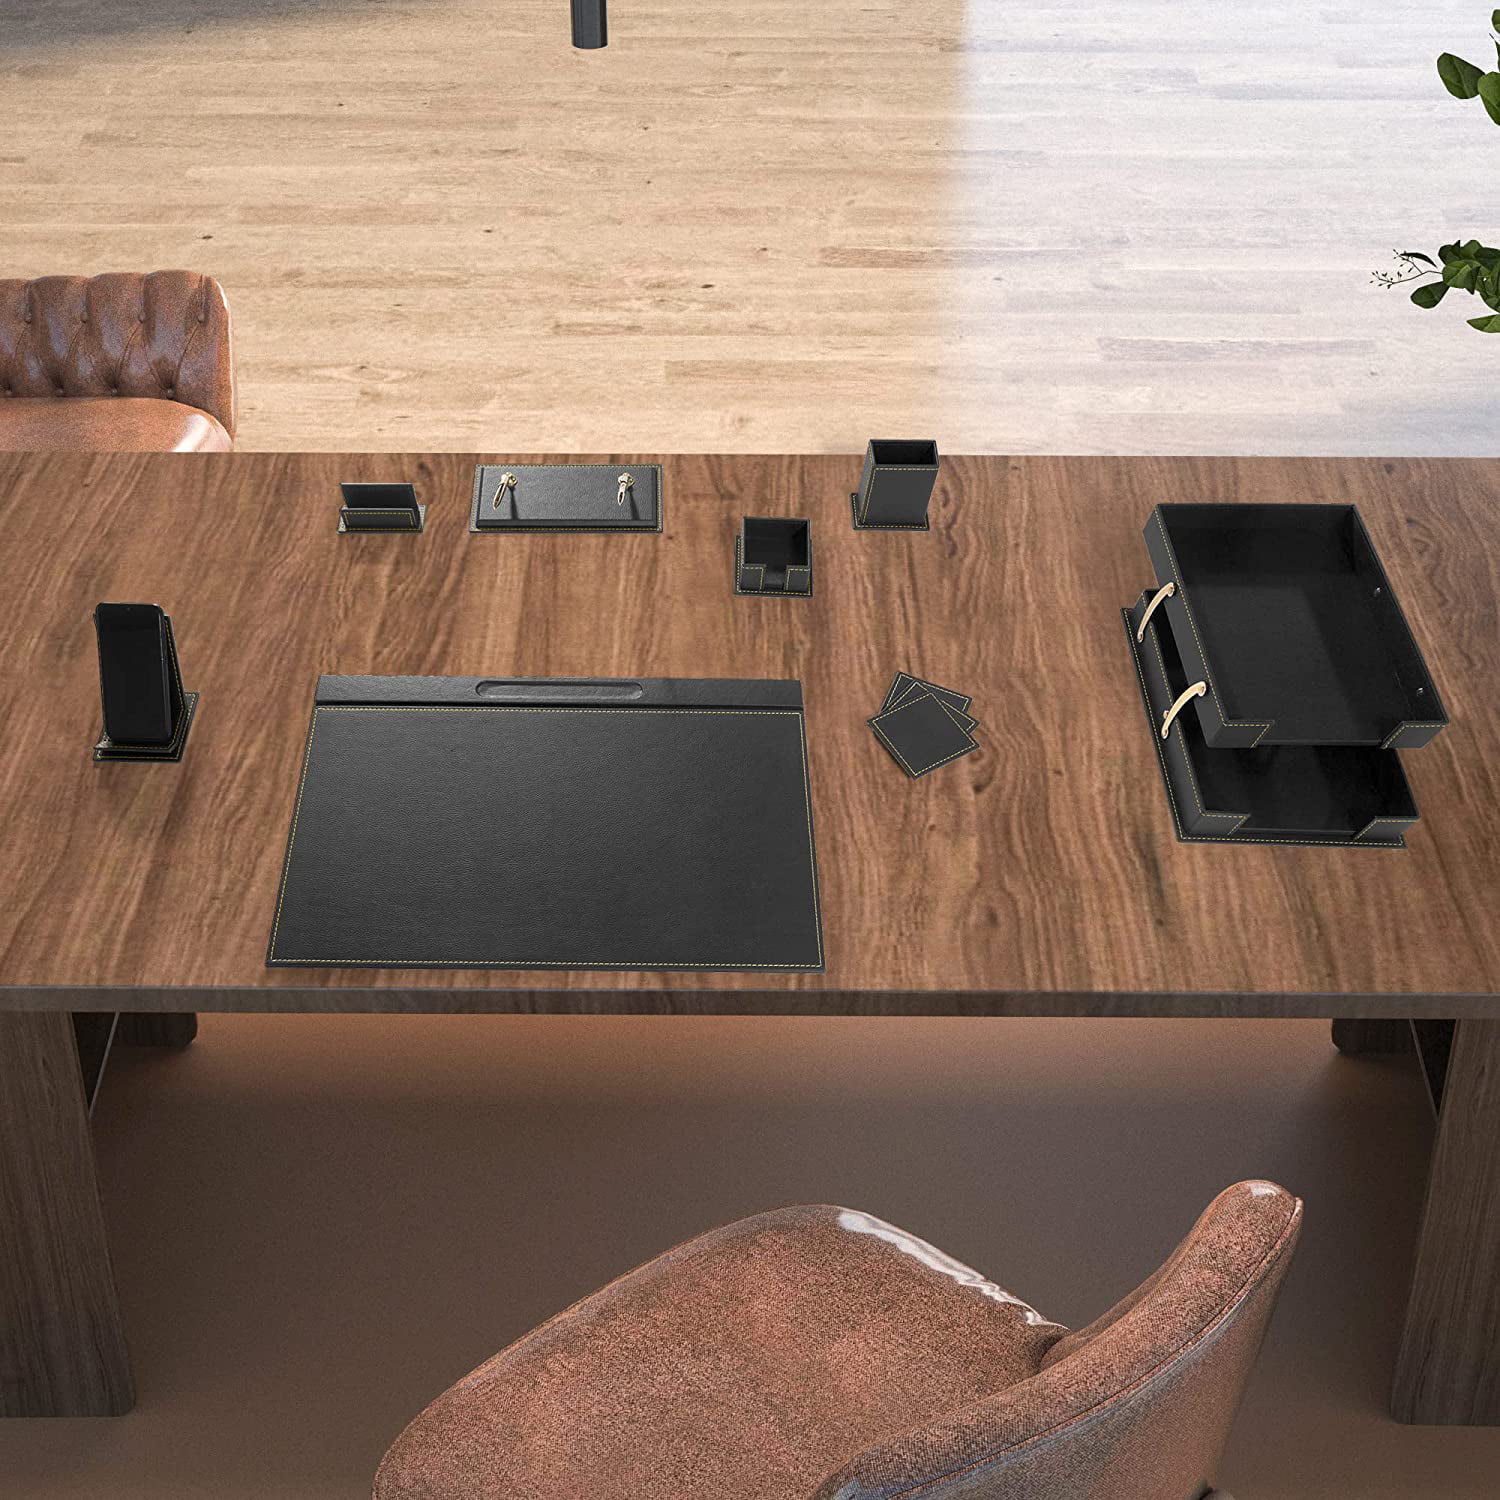 Luxury Desk Set-leather Desk Set-wood Desk Set-office Desk Accessories-organizer  Office-desk Organizer-office Accessories-desk Accessories 